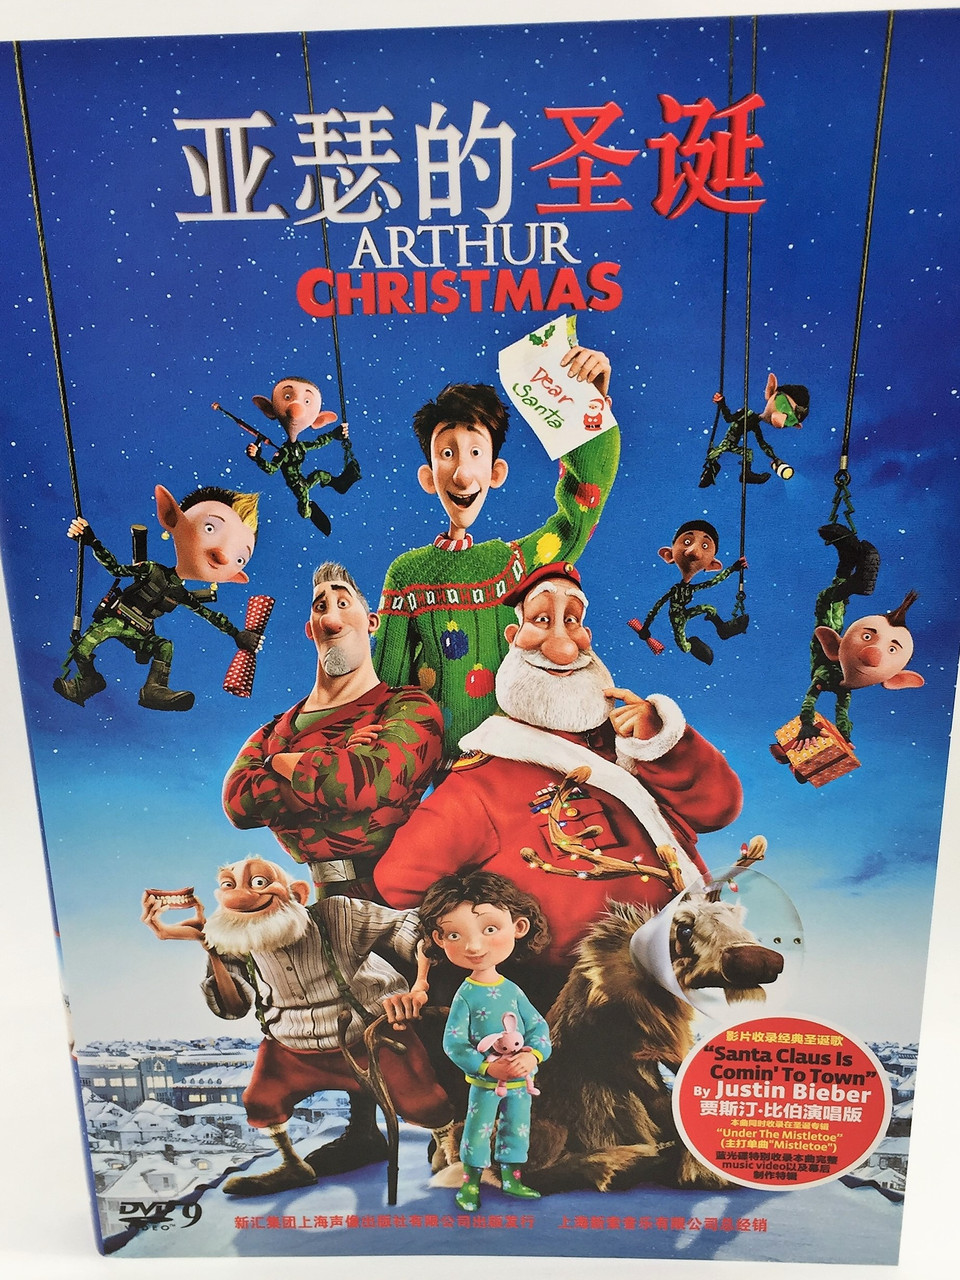 Arthur Christmas (2011) Mandarin Chinese Edition DVD 亚瑟的圣诞 国语/英语 English  and Mandarin Chinese Language Options - bibleinmylanguage